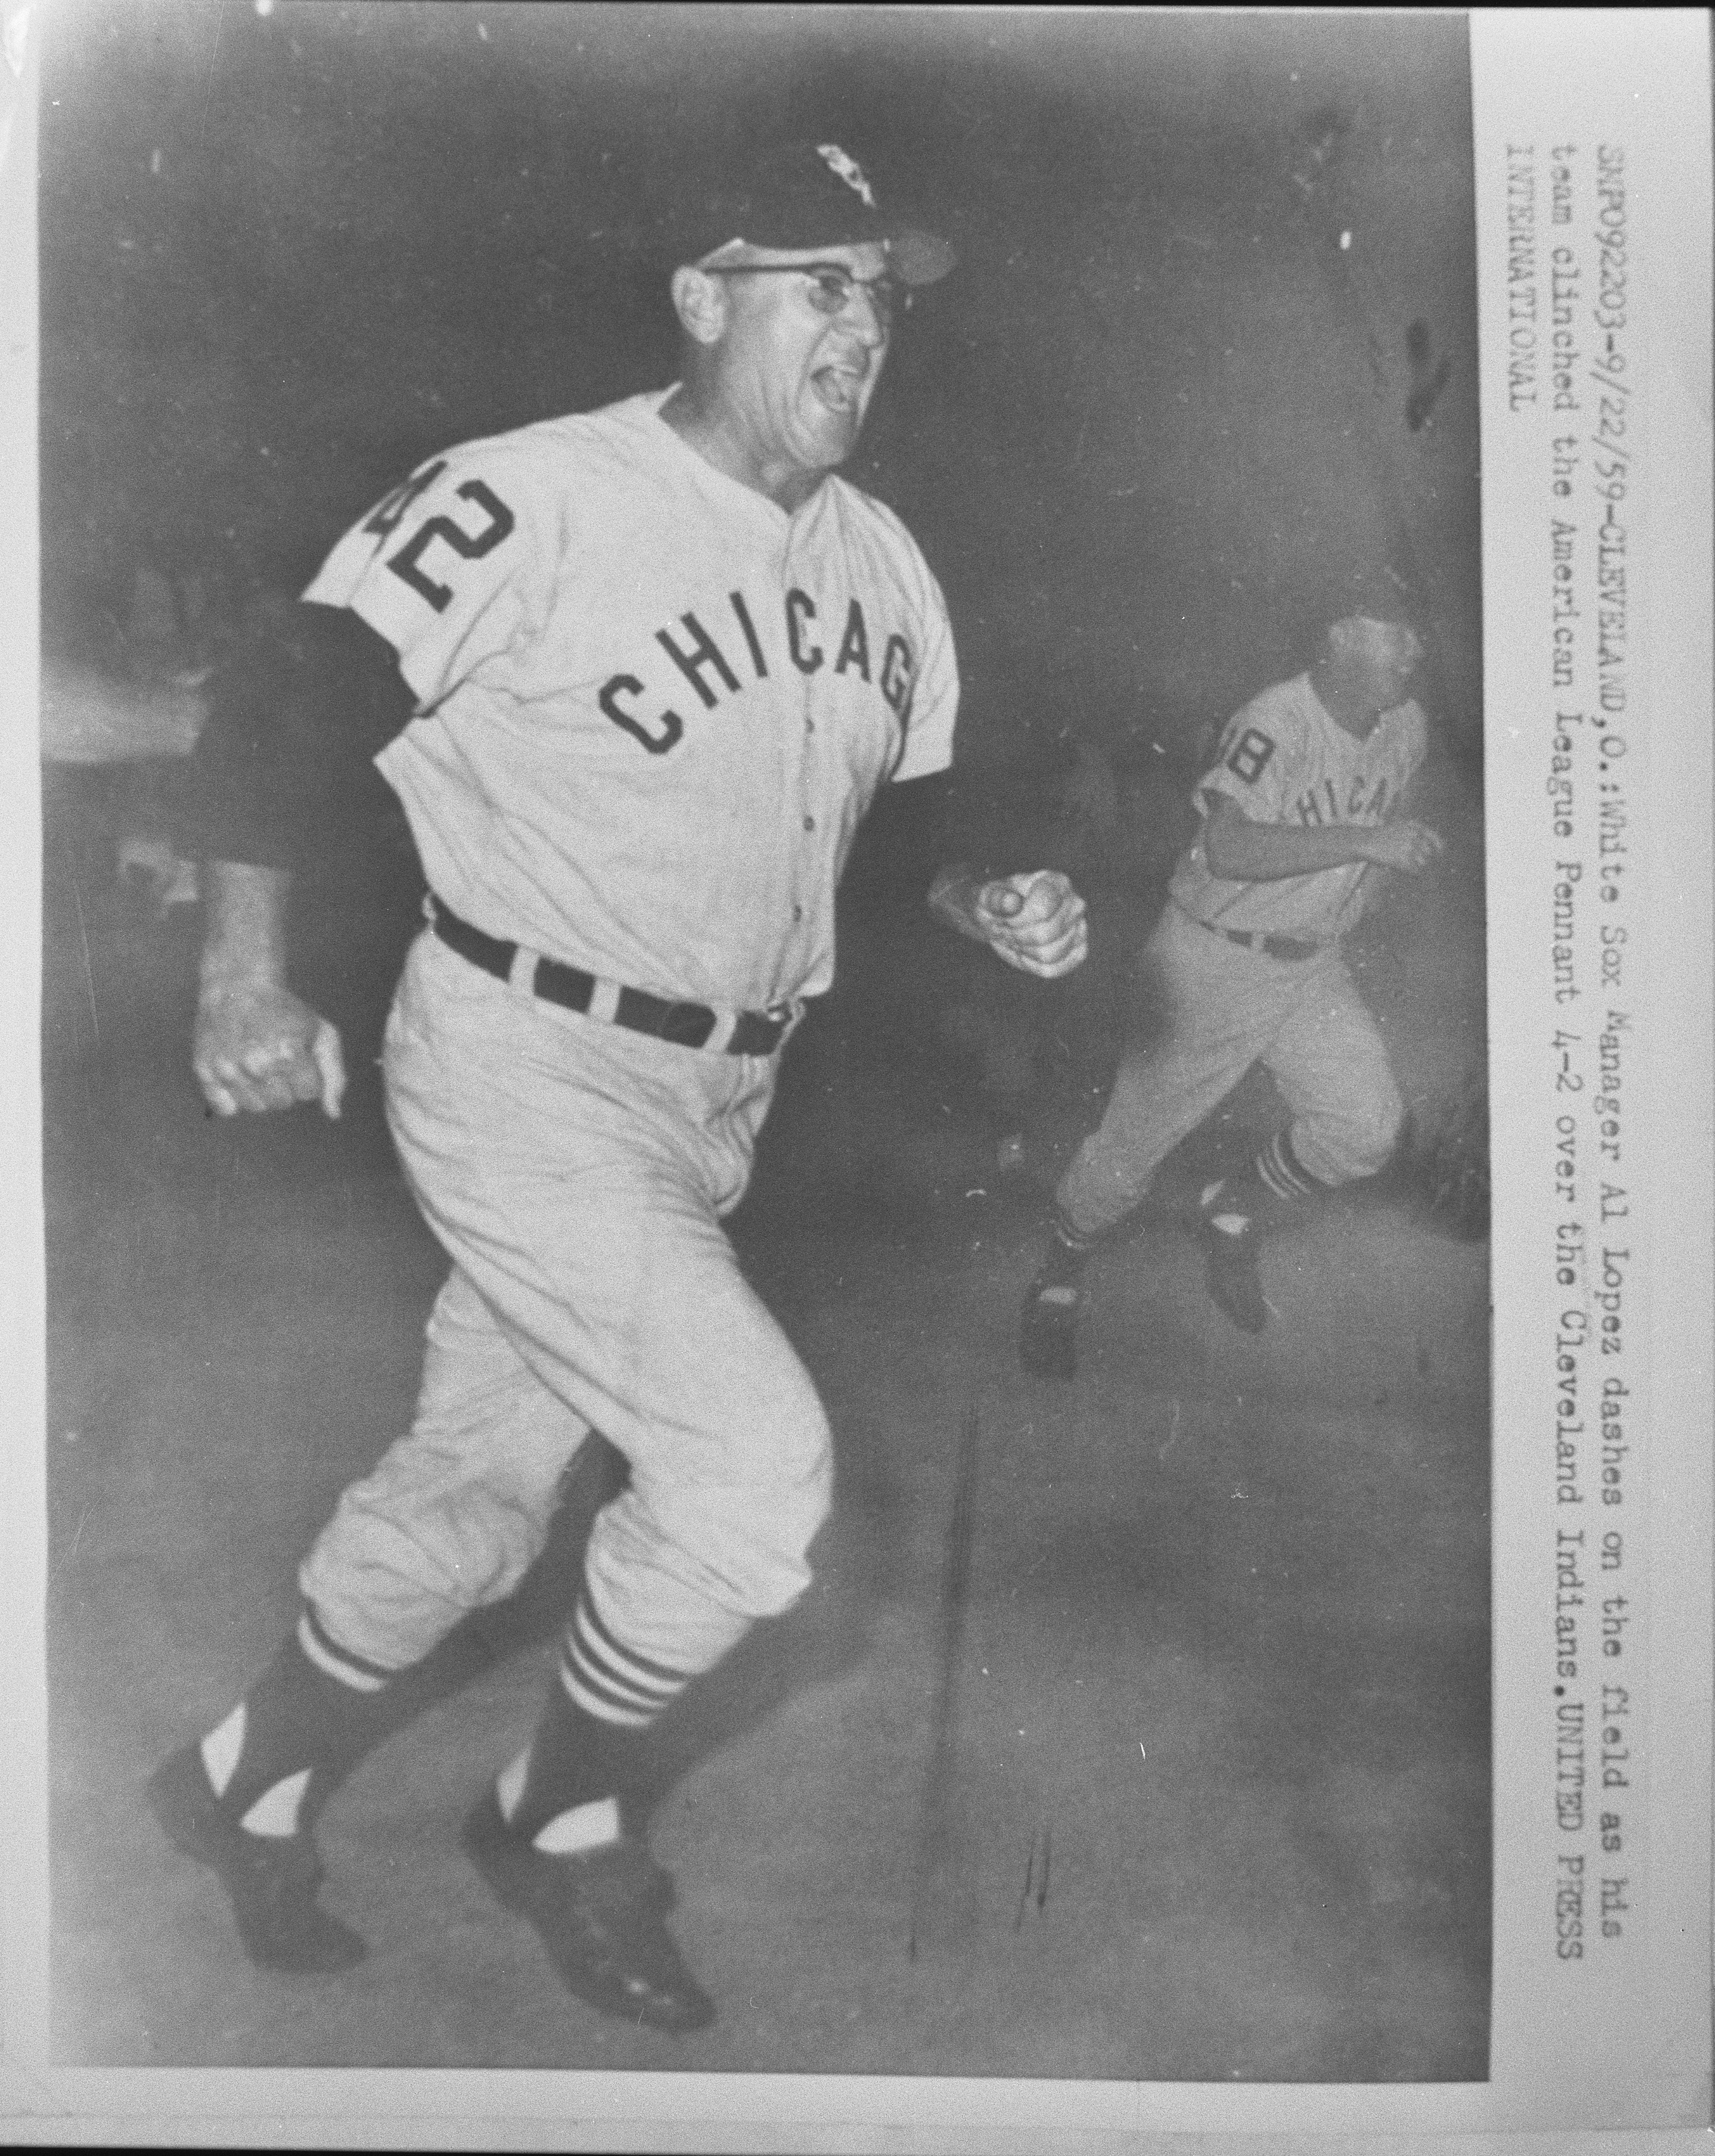 1959 World Series Infield  White sox world series, White sox baseball,  Chicago white sox